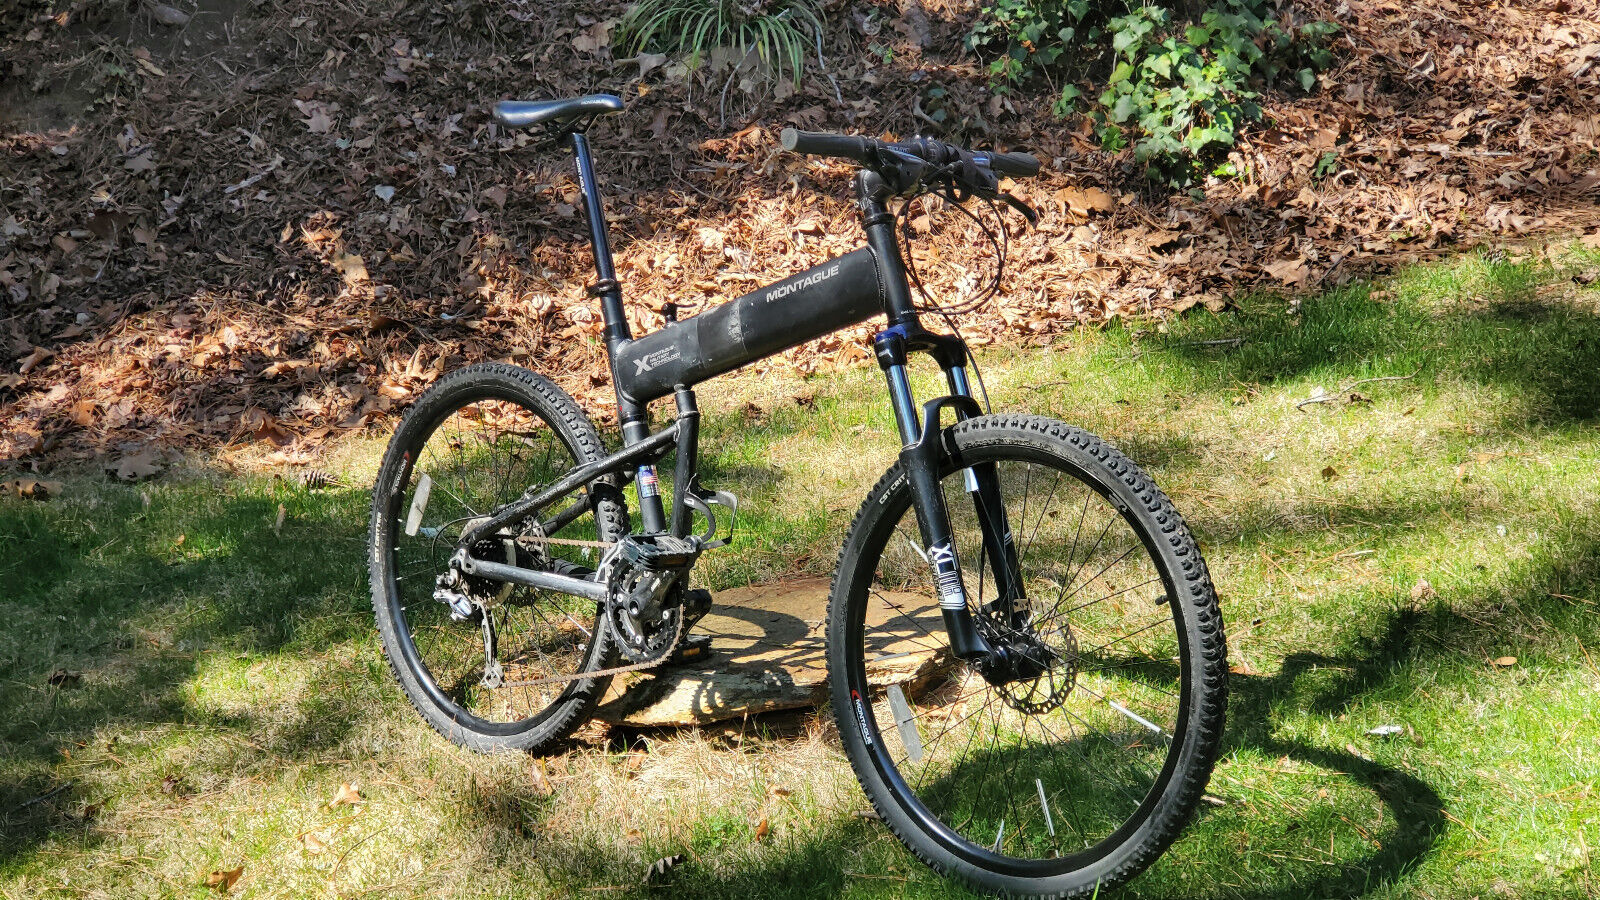 Monatgue paratrouper pro, foldable Mountain bike